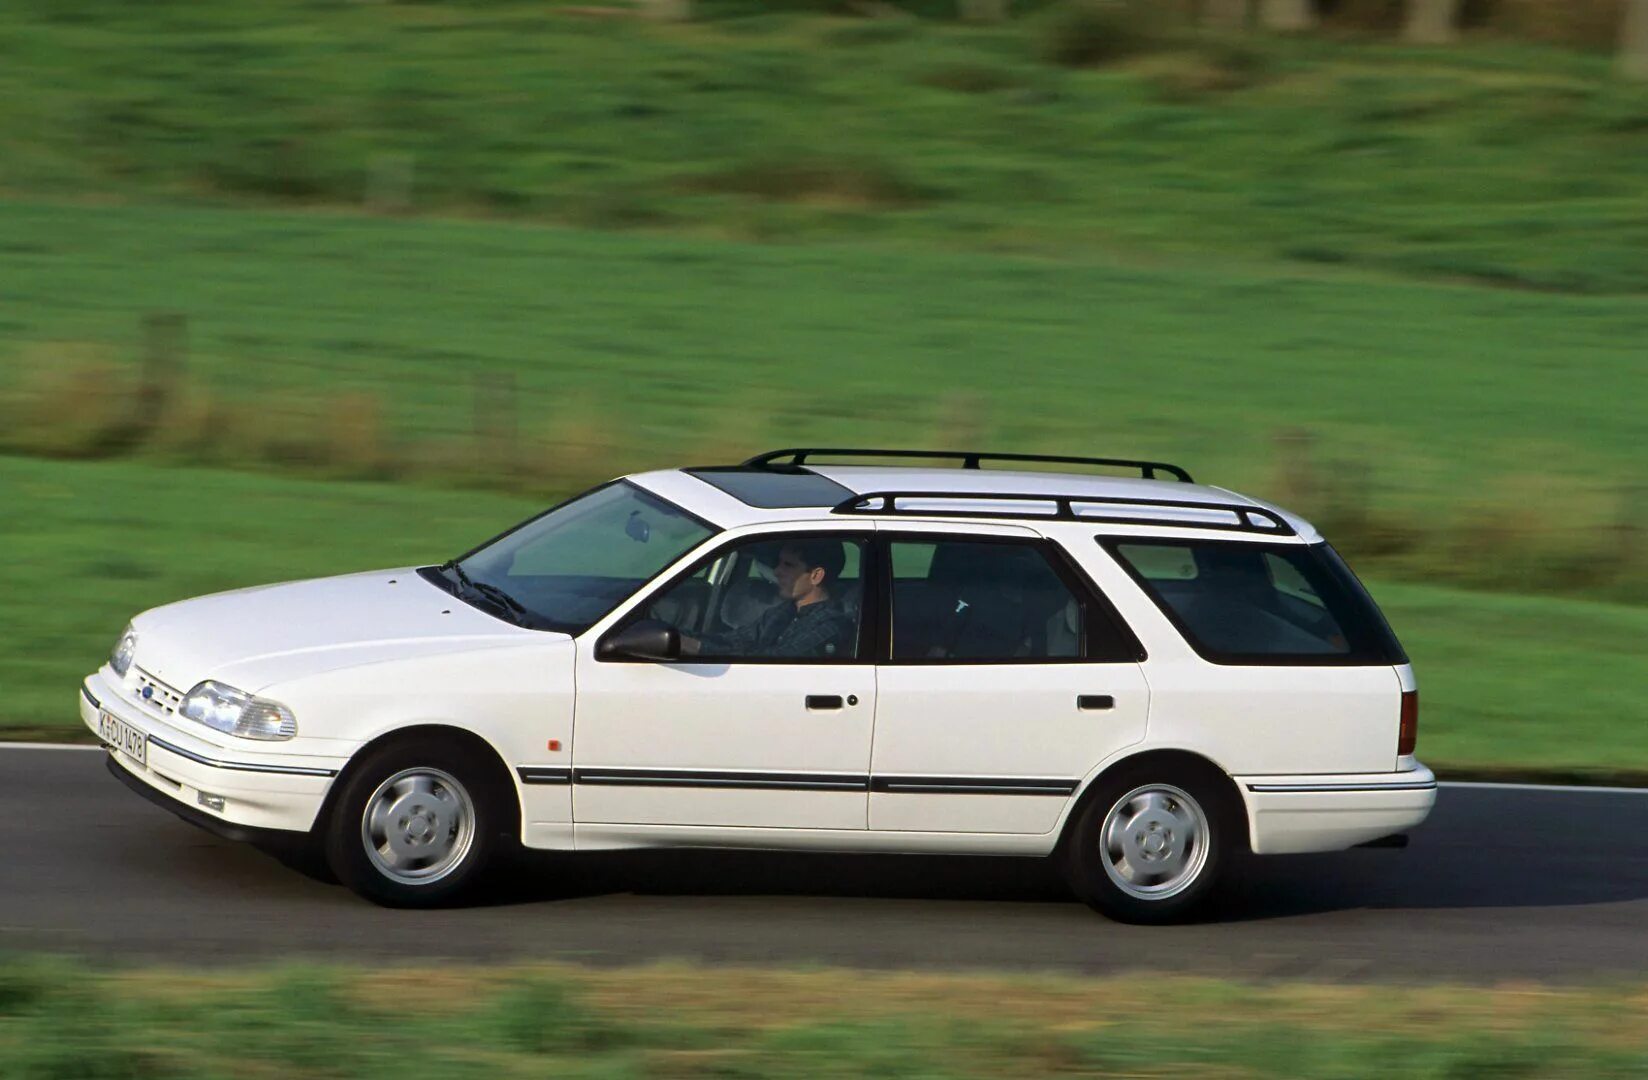 Ford Scorpio 1 универсал. Ford Scorpio Turnier 1992. Ford Scorpio 1 Wagon. Форд Скорпио универсал 1992. Универсал б 1